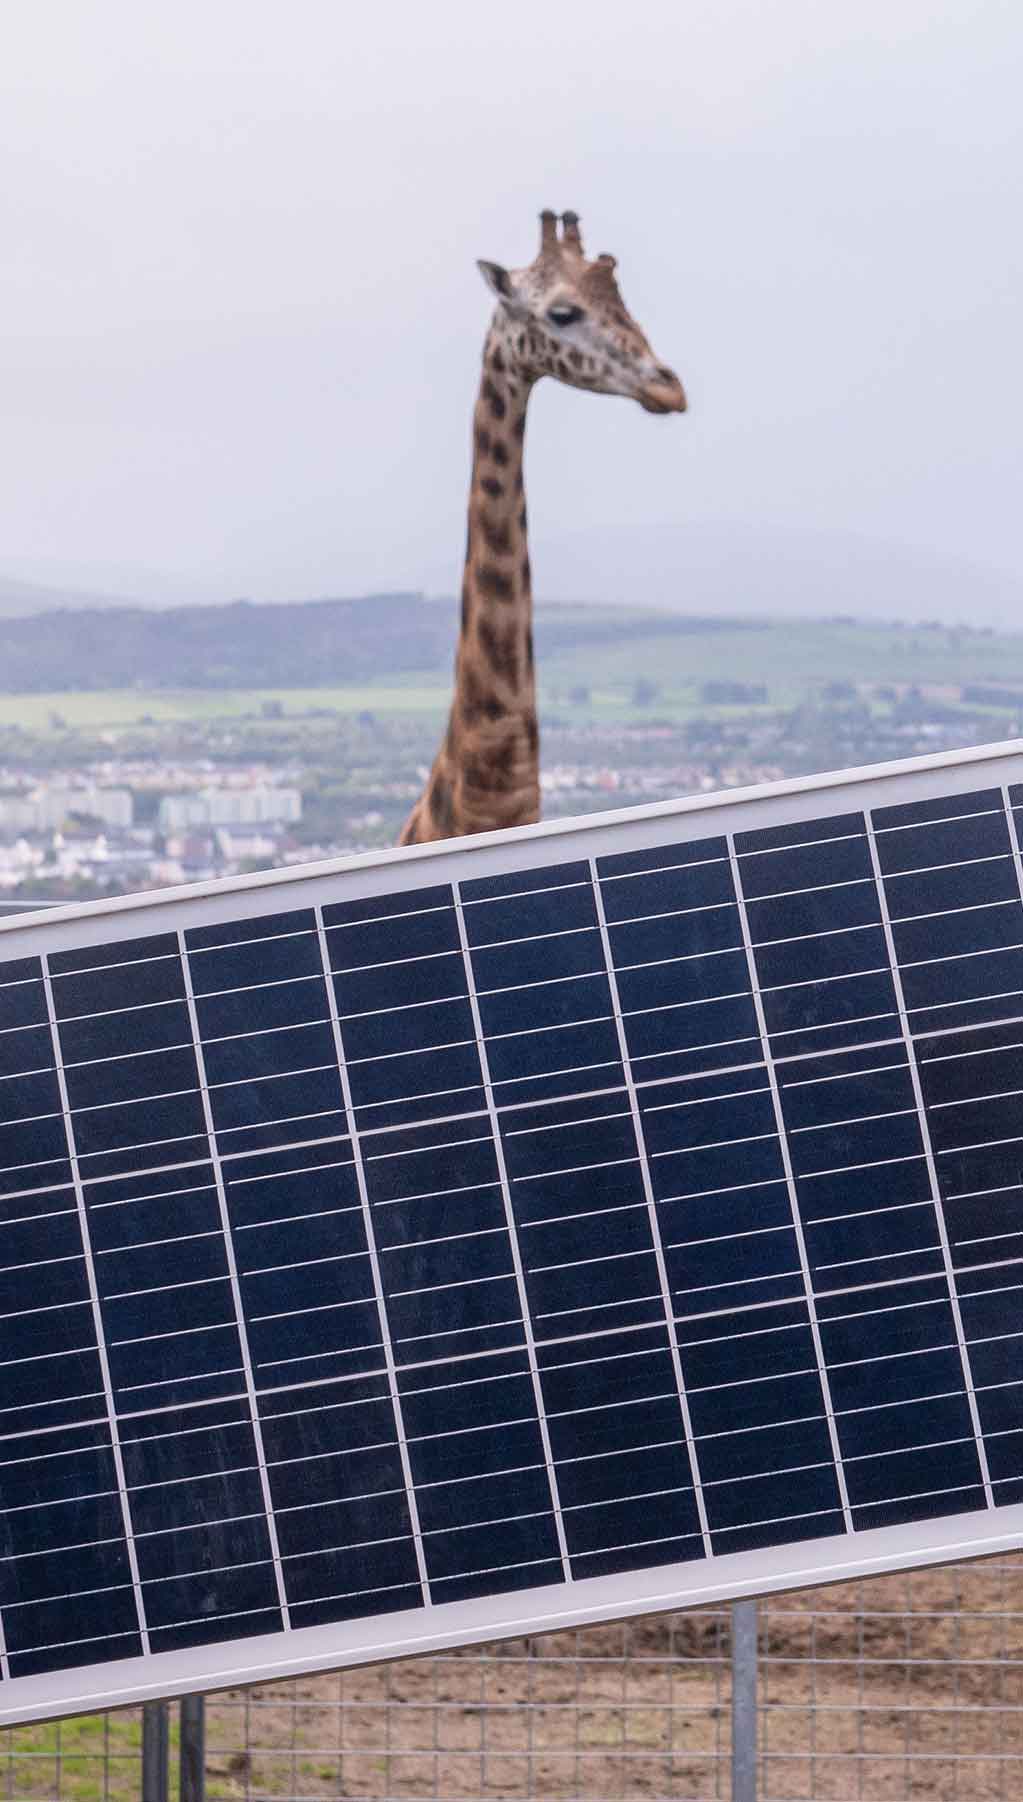 Solar panel in front of giraffes